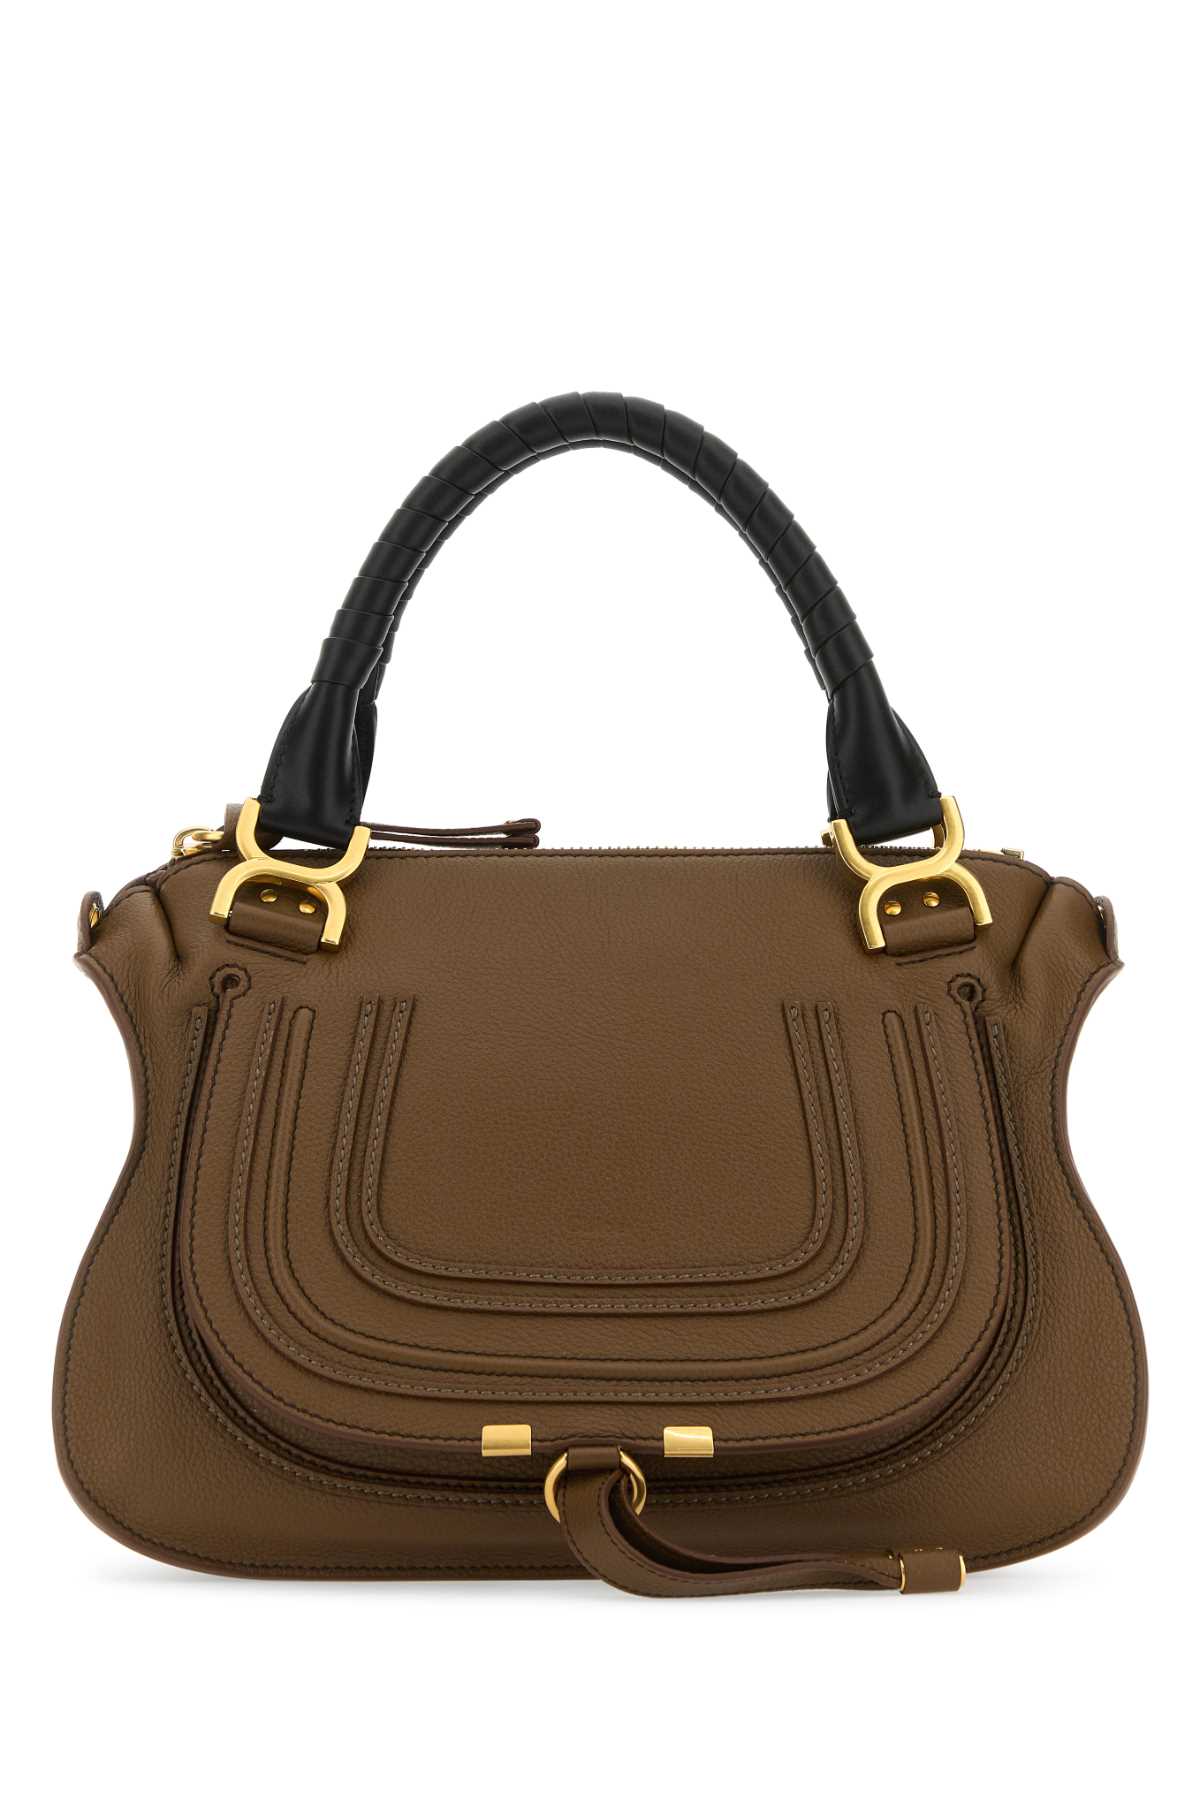 Chloé Brown Leather Small Marcie Handbag